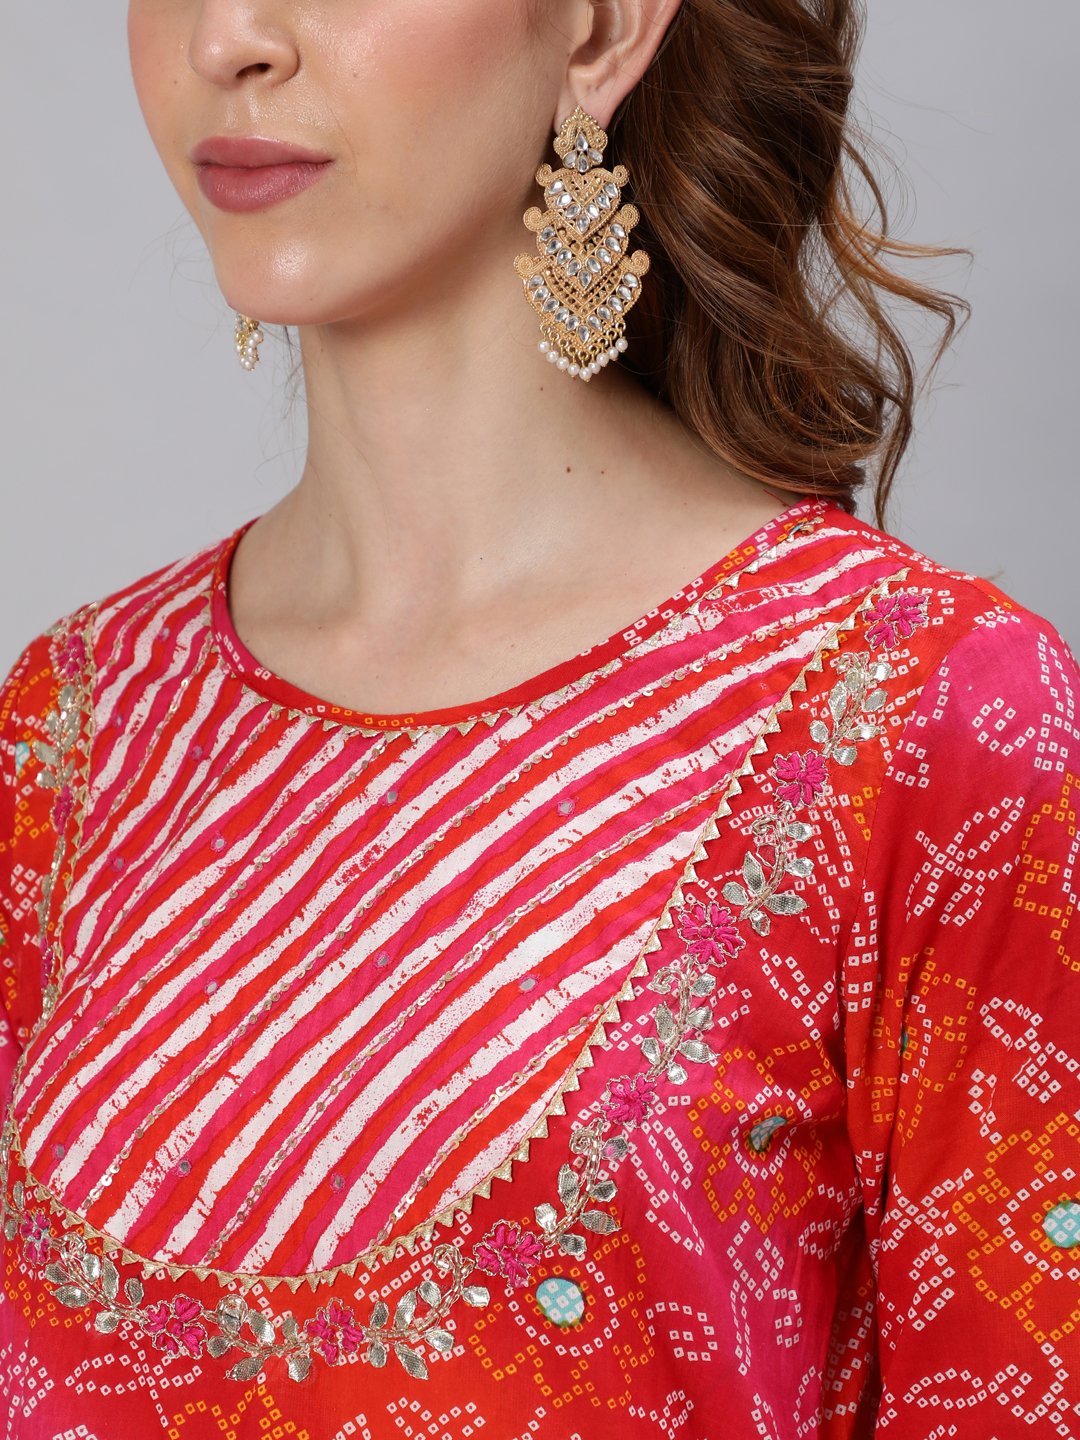 Ishin Women's Cotton Multicolor Embroidered Anarkali Kurta Trouser Dupatta Set